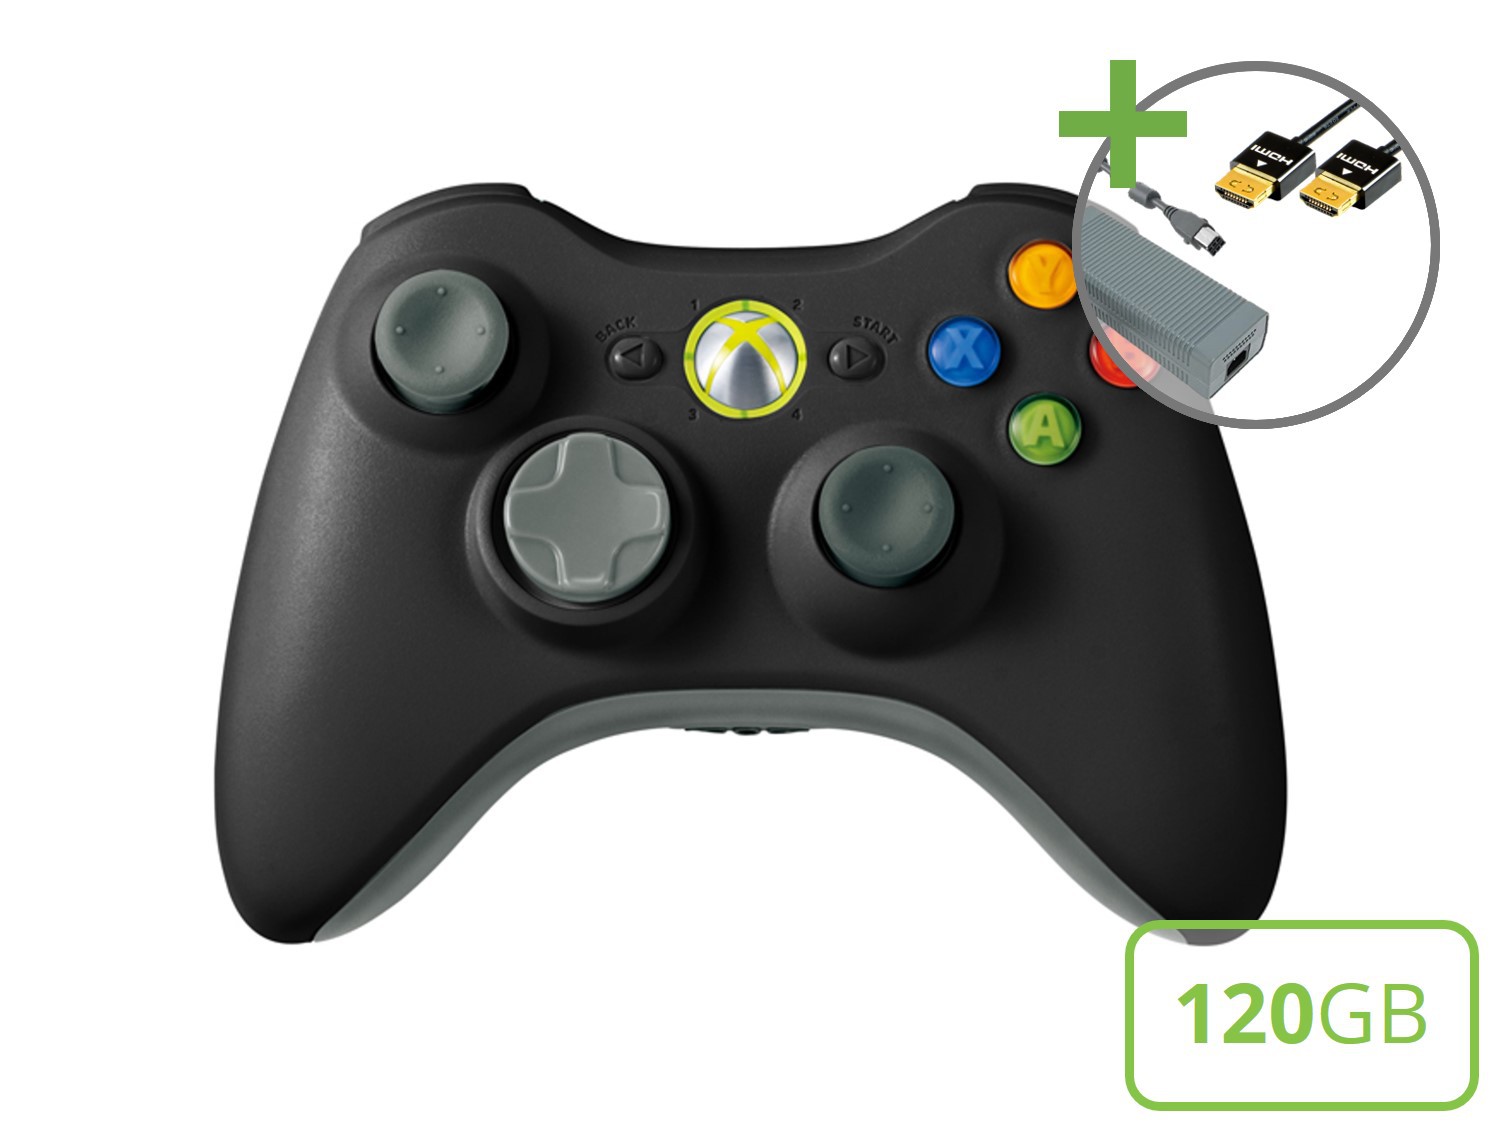 Microsoft Xbox 360 Elite Starter Pack - Forza Motorsport 3 and Halo 3: ODST Edition - Xbox 360 Hardware - 4